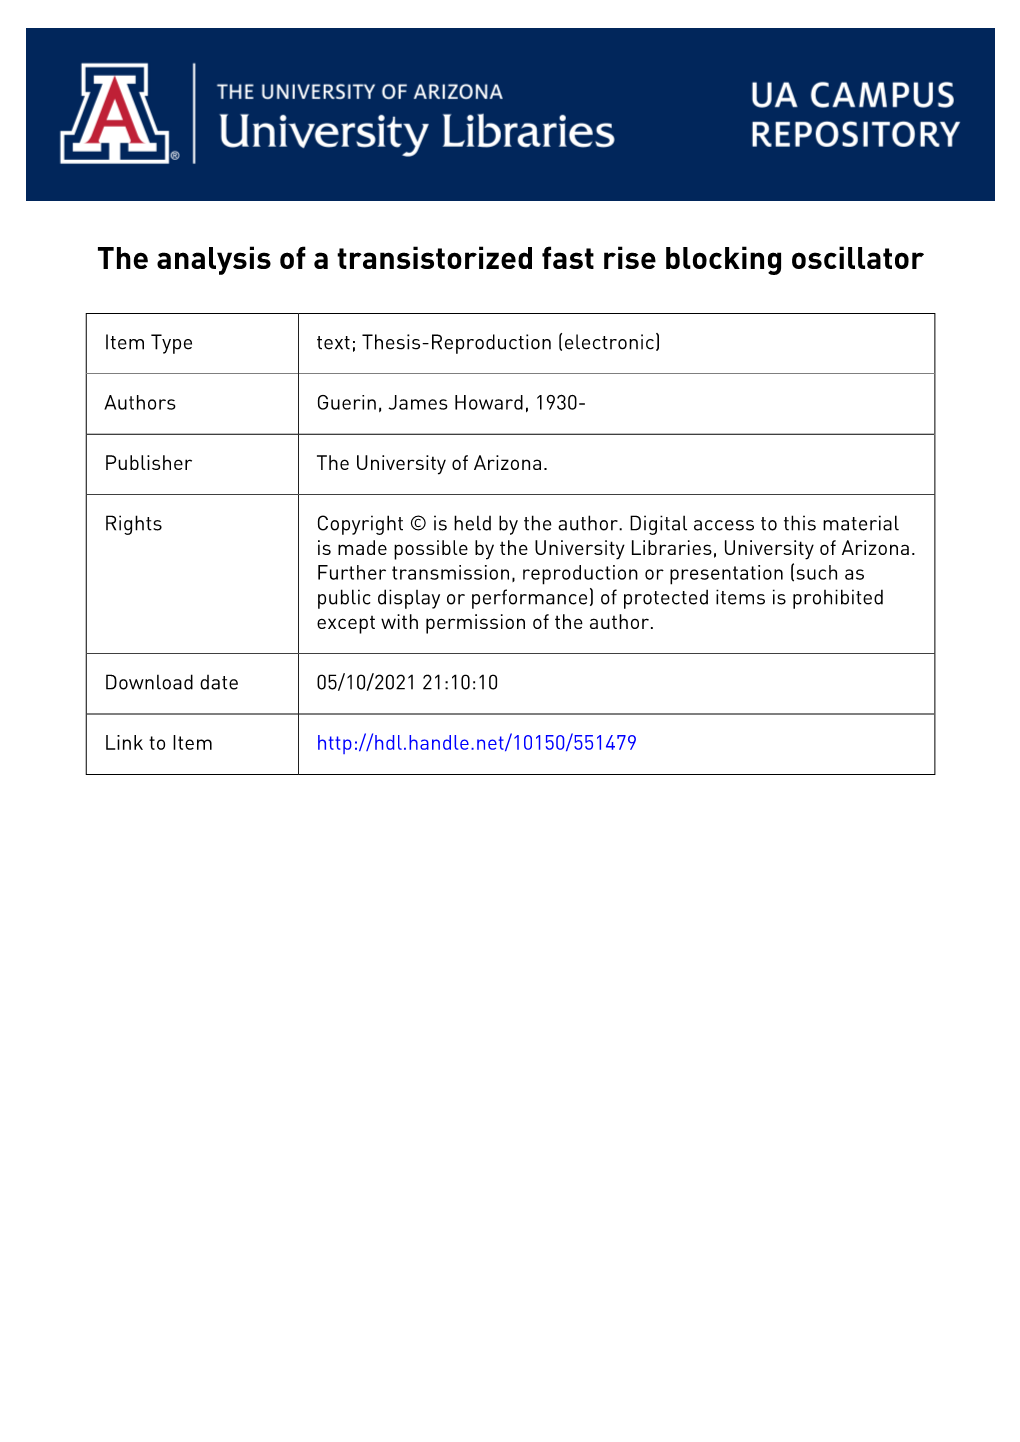 The Analysis of a Transistorized Fast Rise Blocking Oscillator